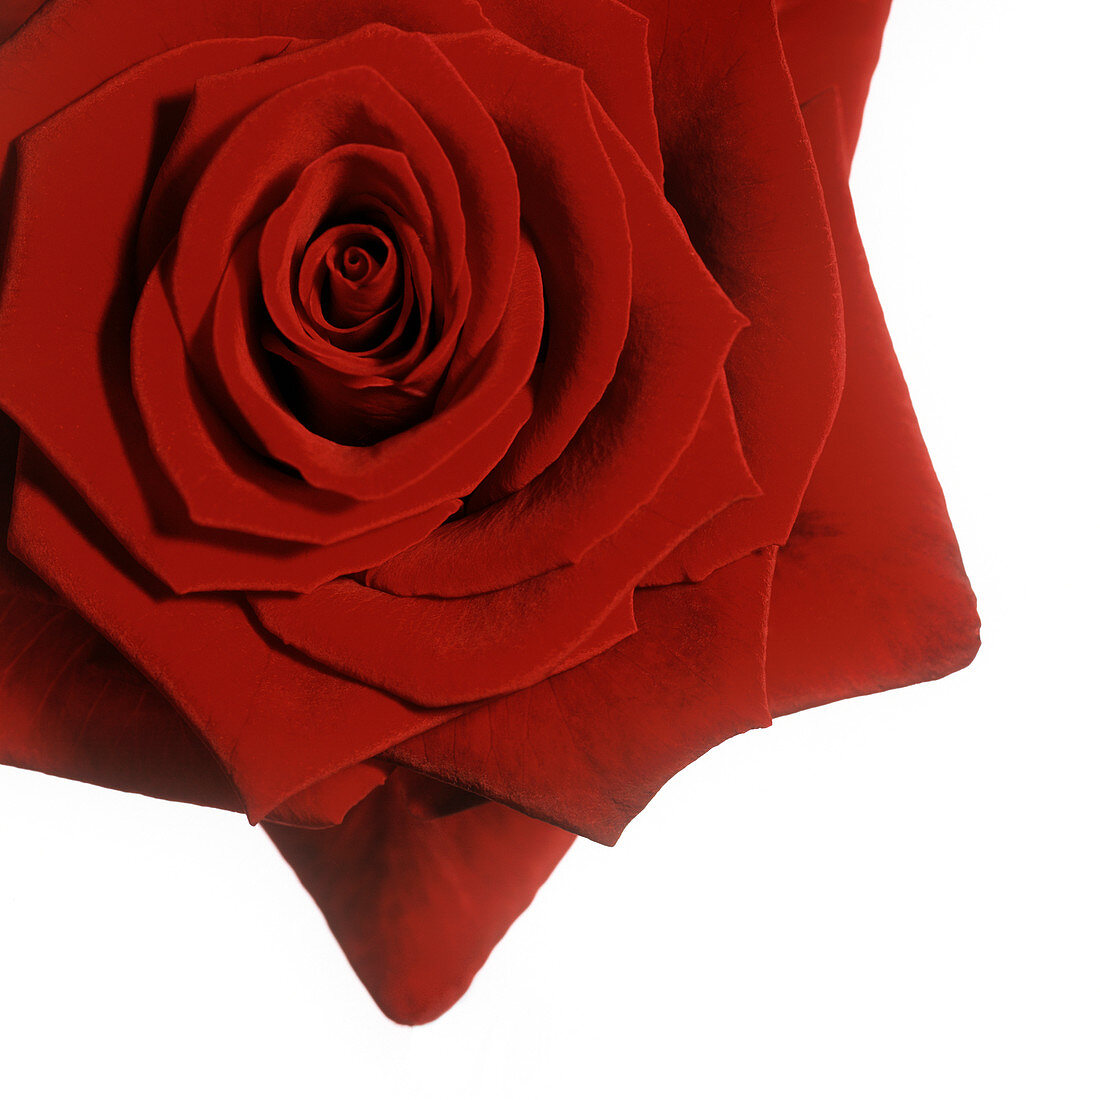 Red rose (Rosa 'Grand Prix')